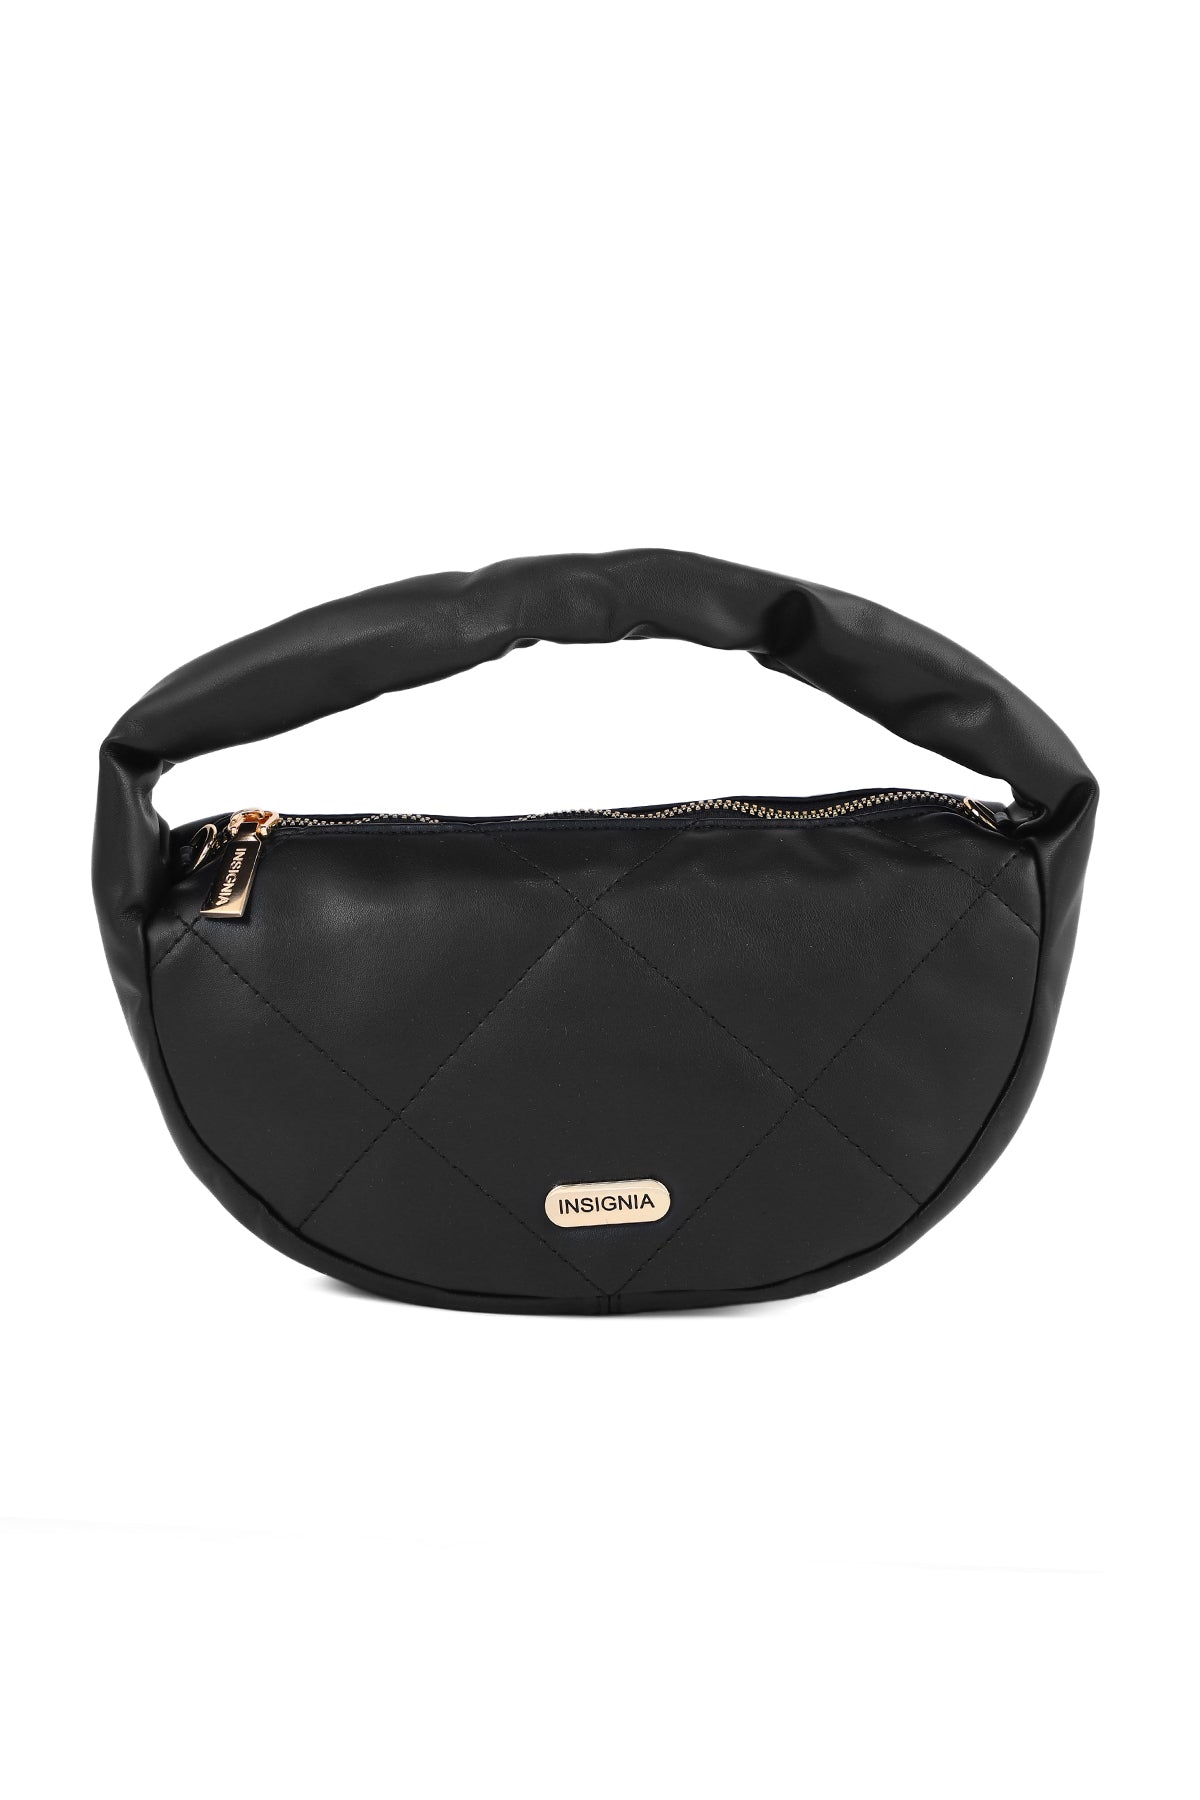 Hobo Hand Bags B15006-Black